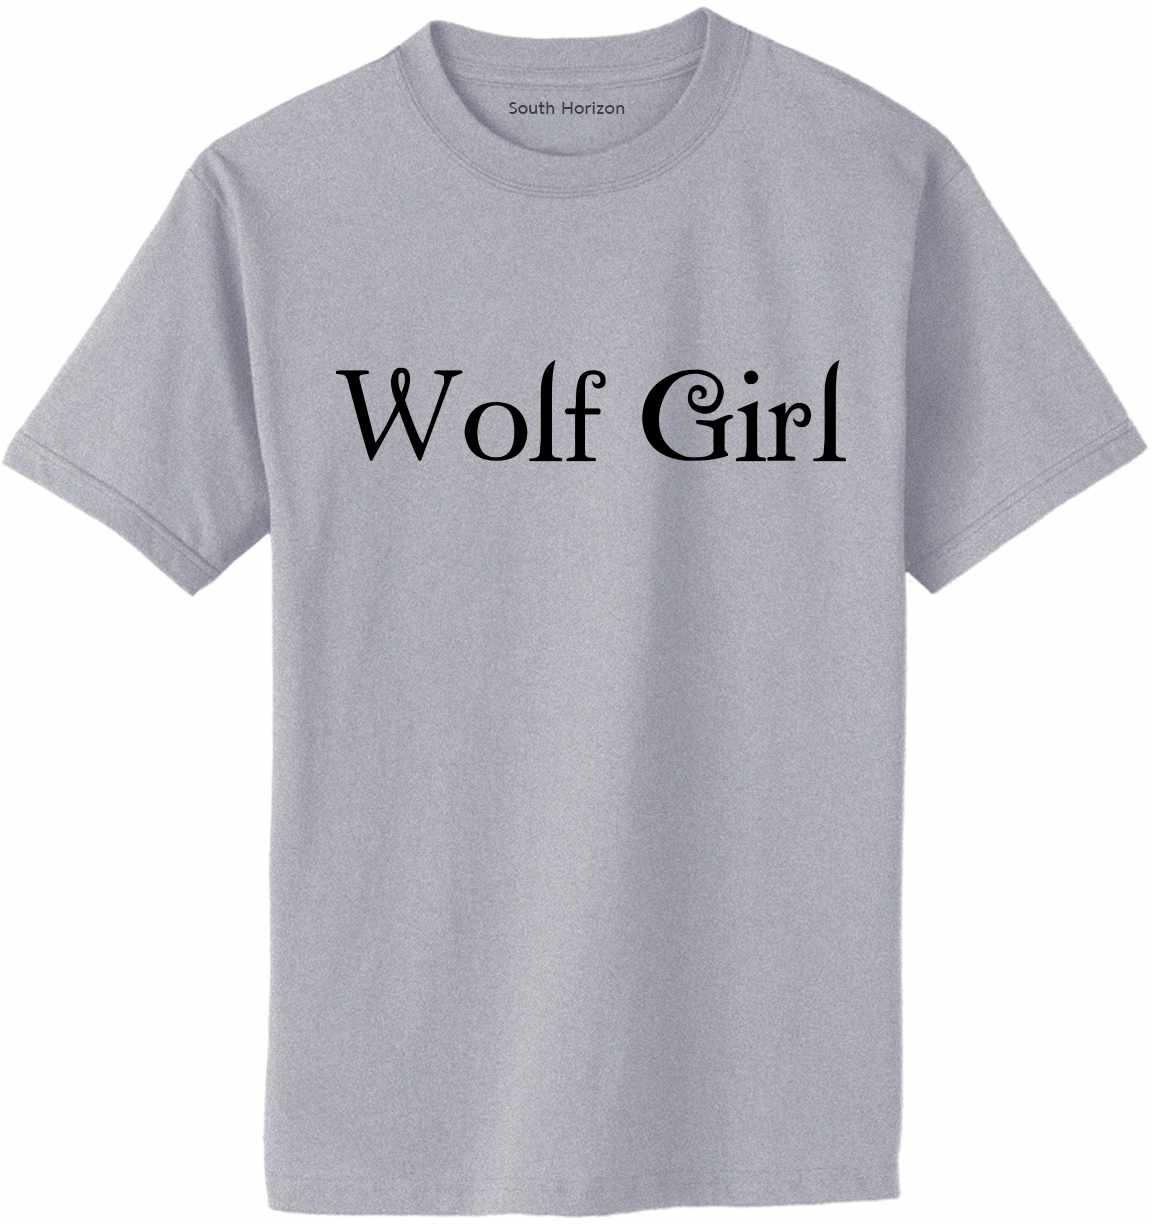 Wolf Girl Adult T-Shirt (#526-1)